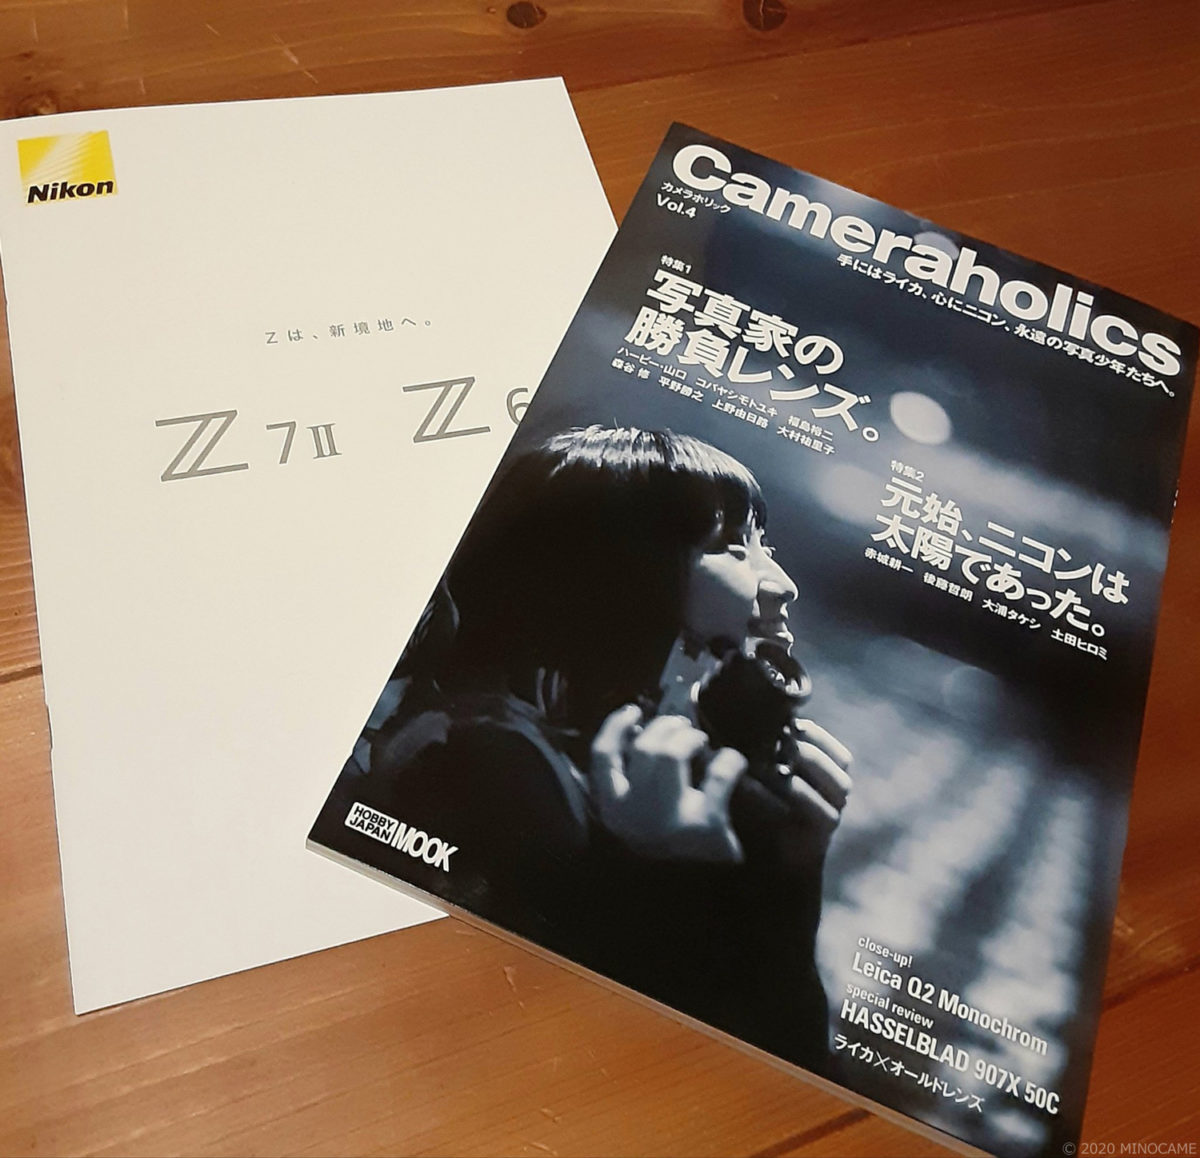 Cameraholics Vol.4 and Nikon Z7II Z6II catalogue